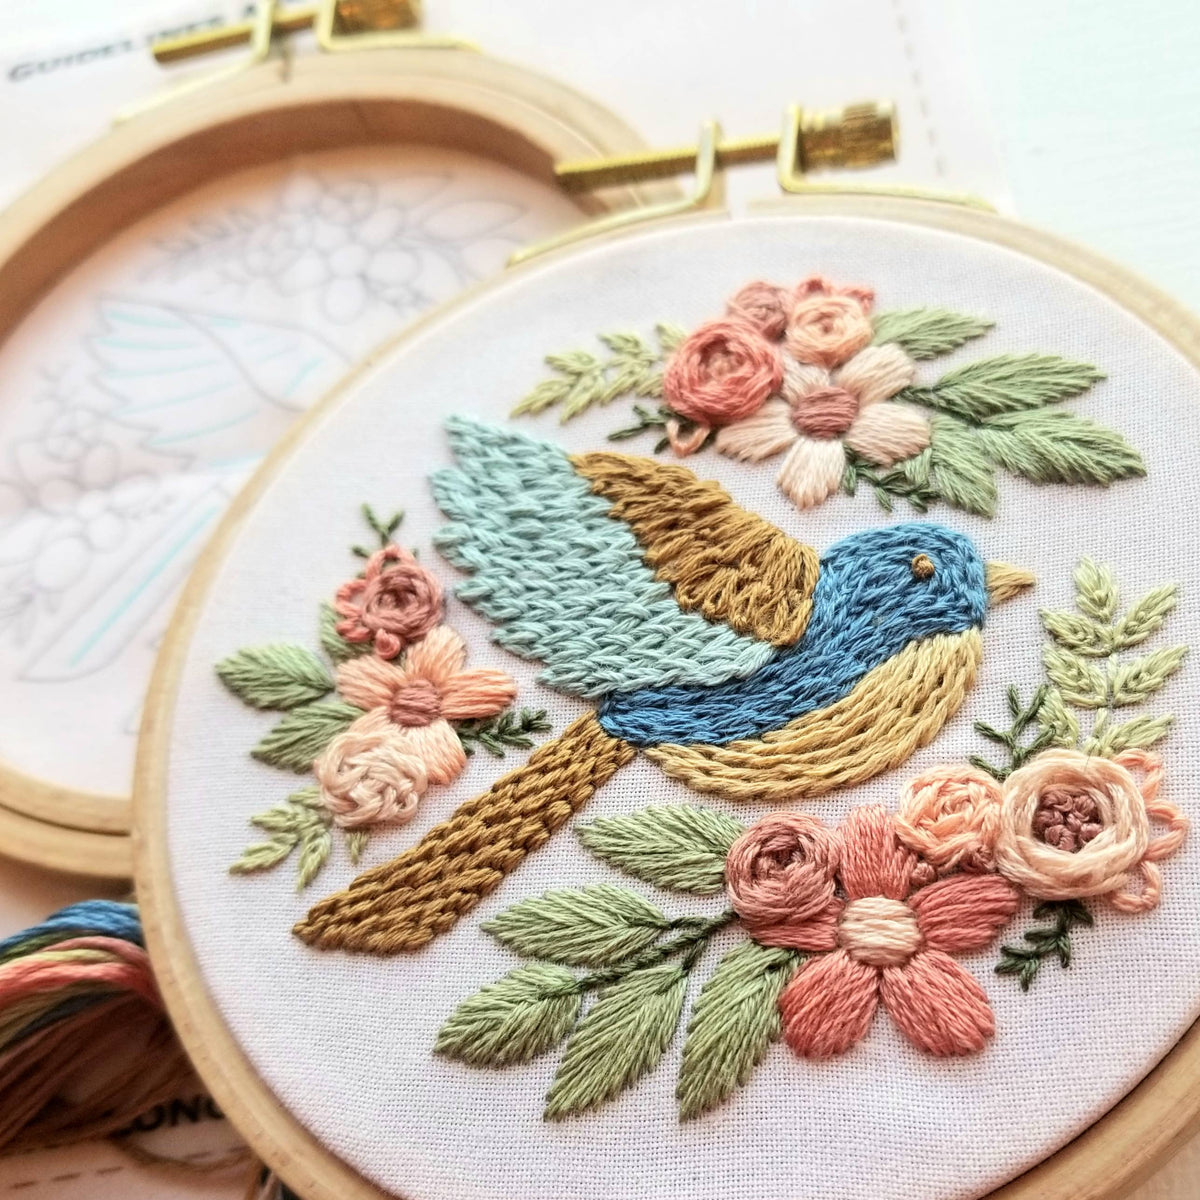 Jessica Long Embroidery Bluebird Sampler beginner hand embroidery kit